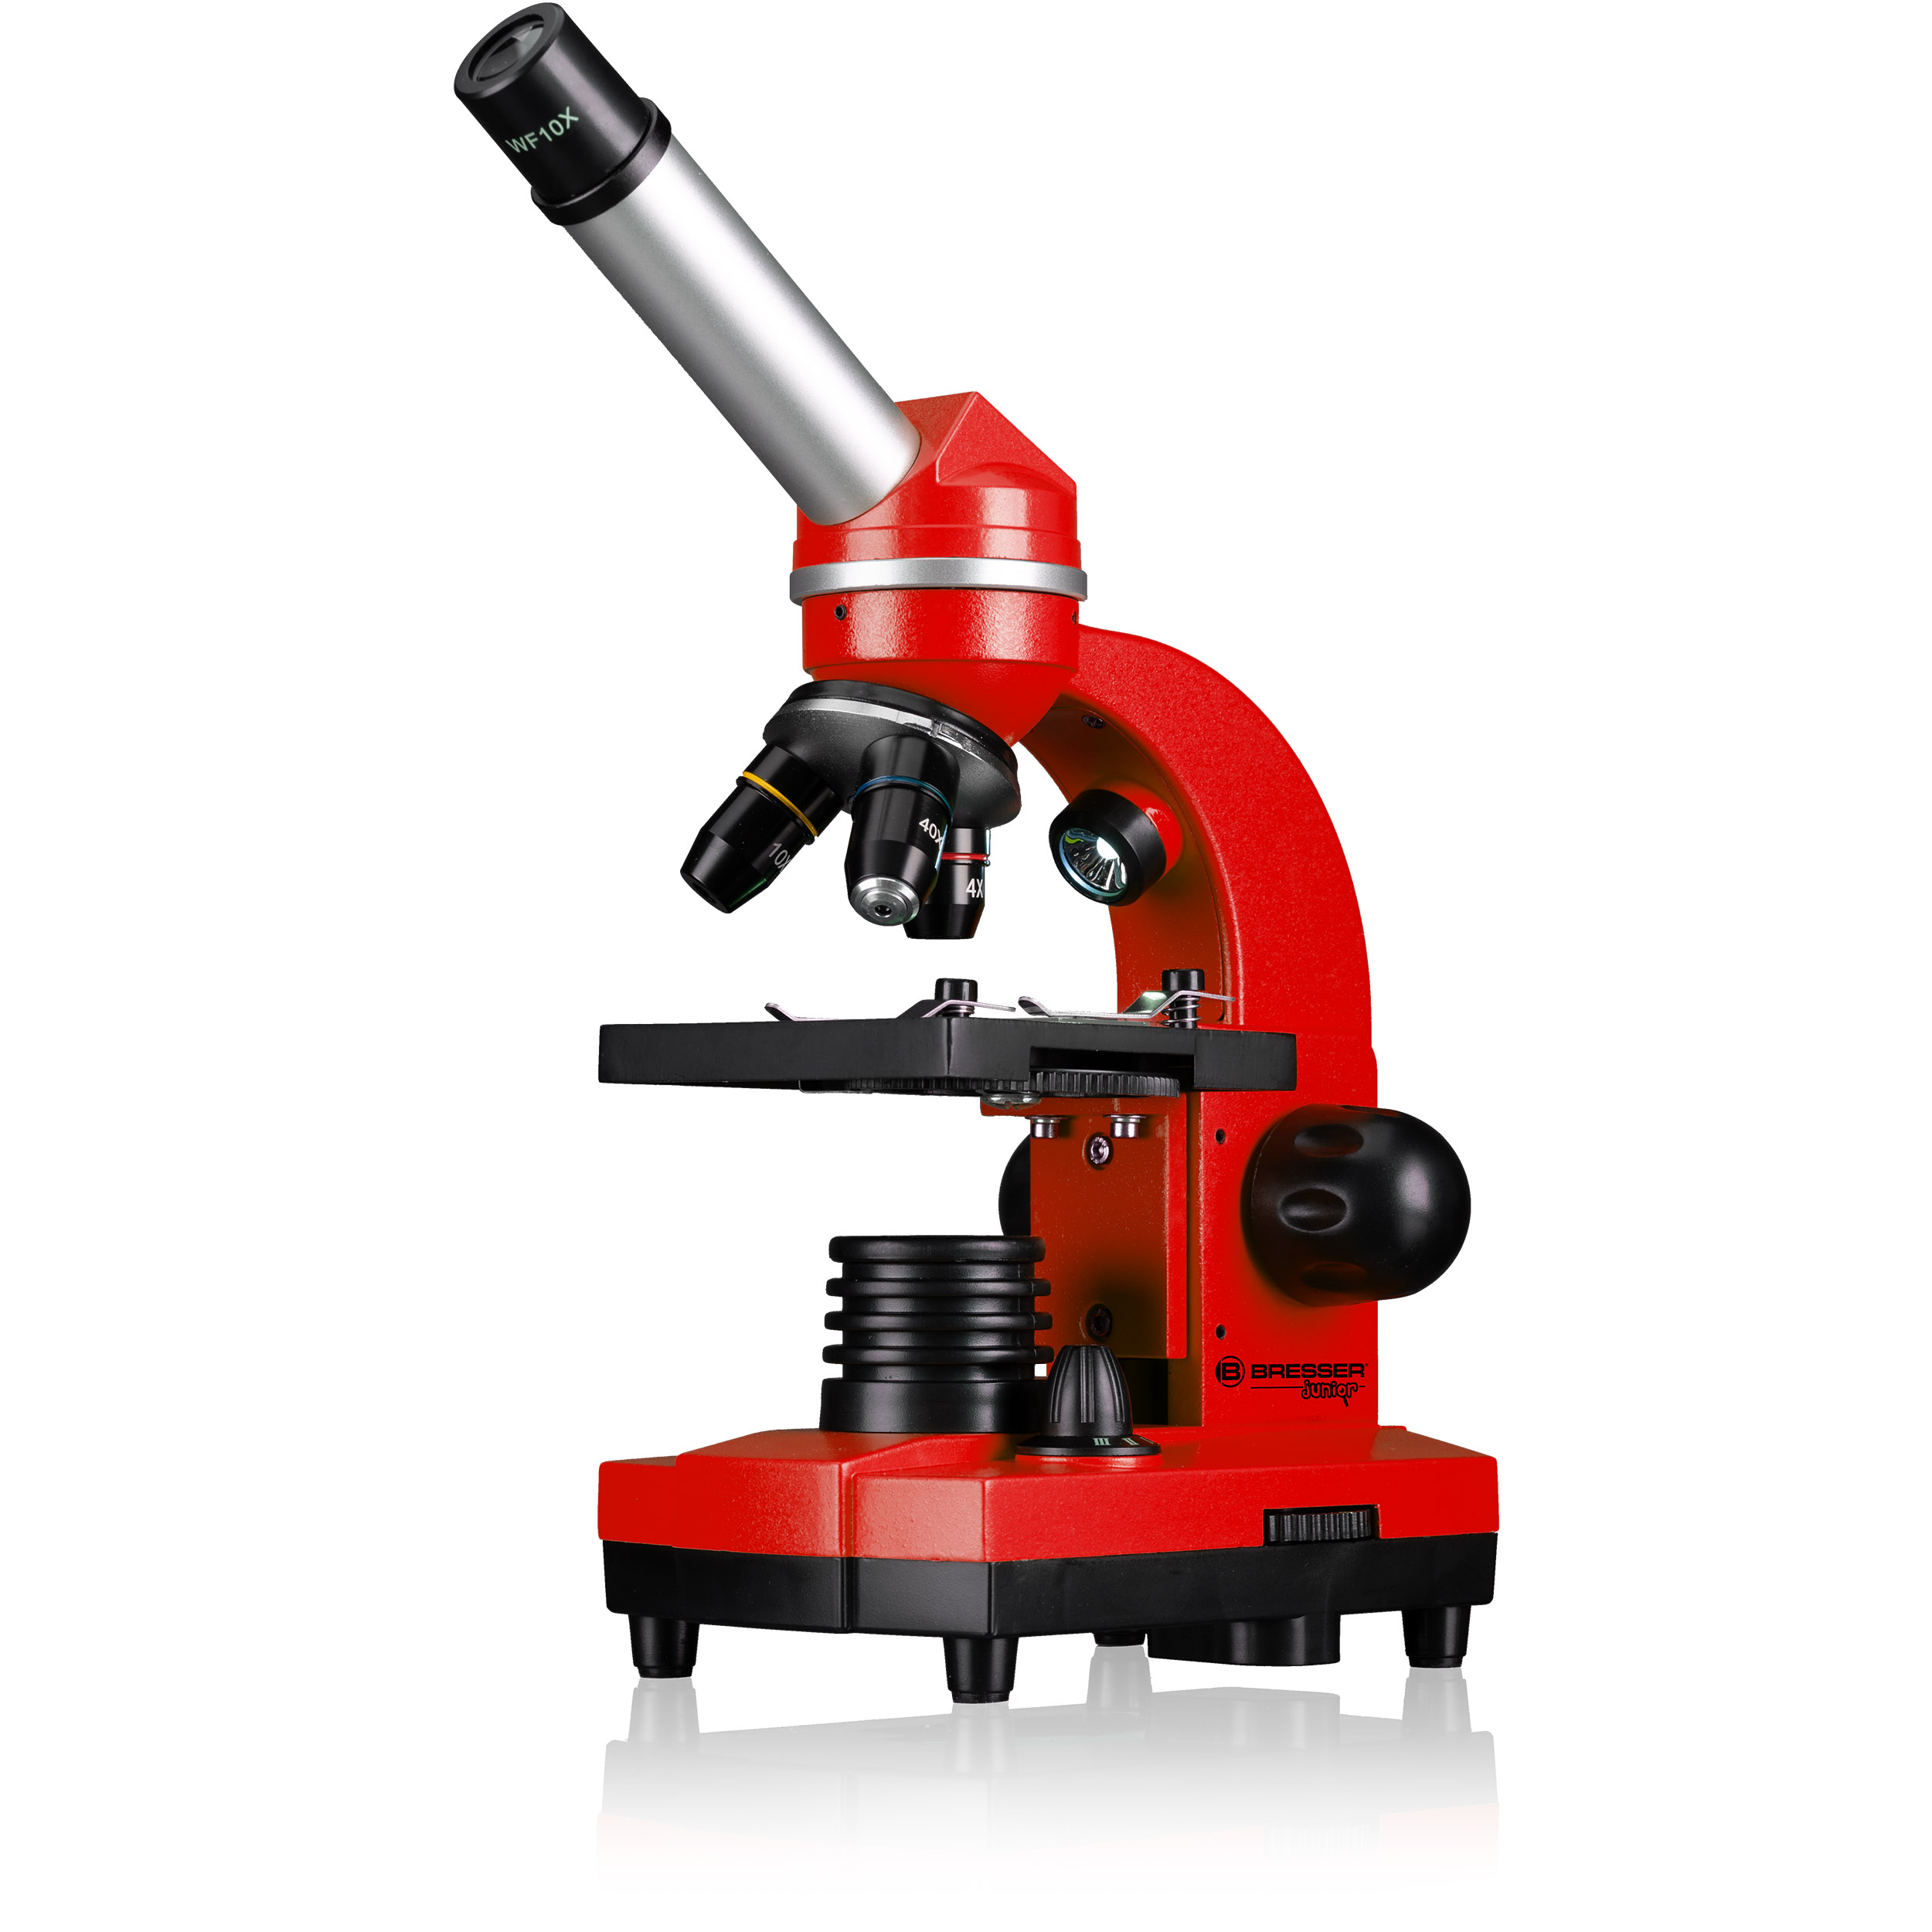 Microscope Optique l'Etudiant